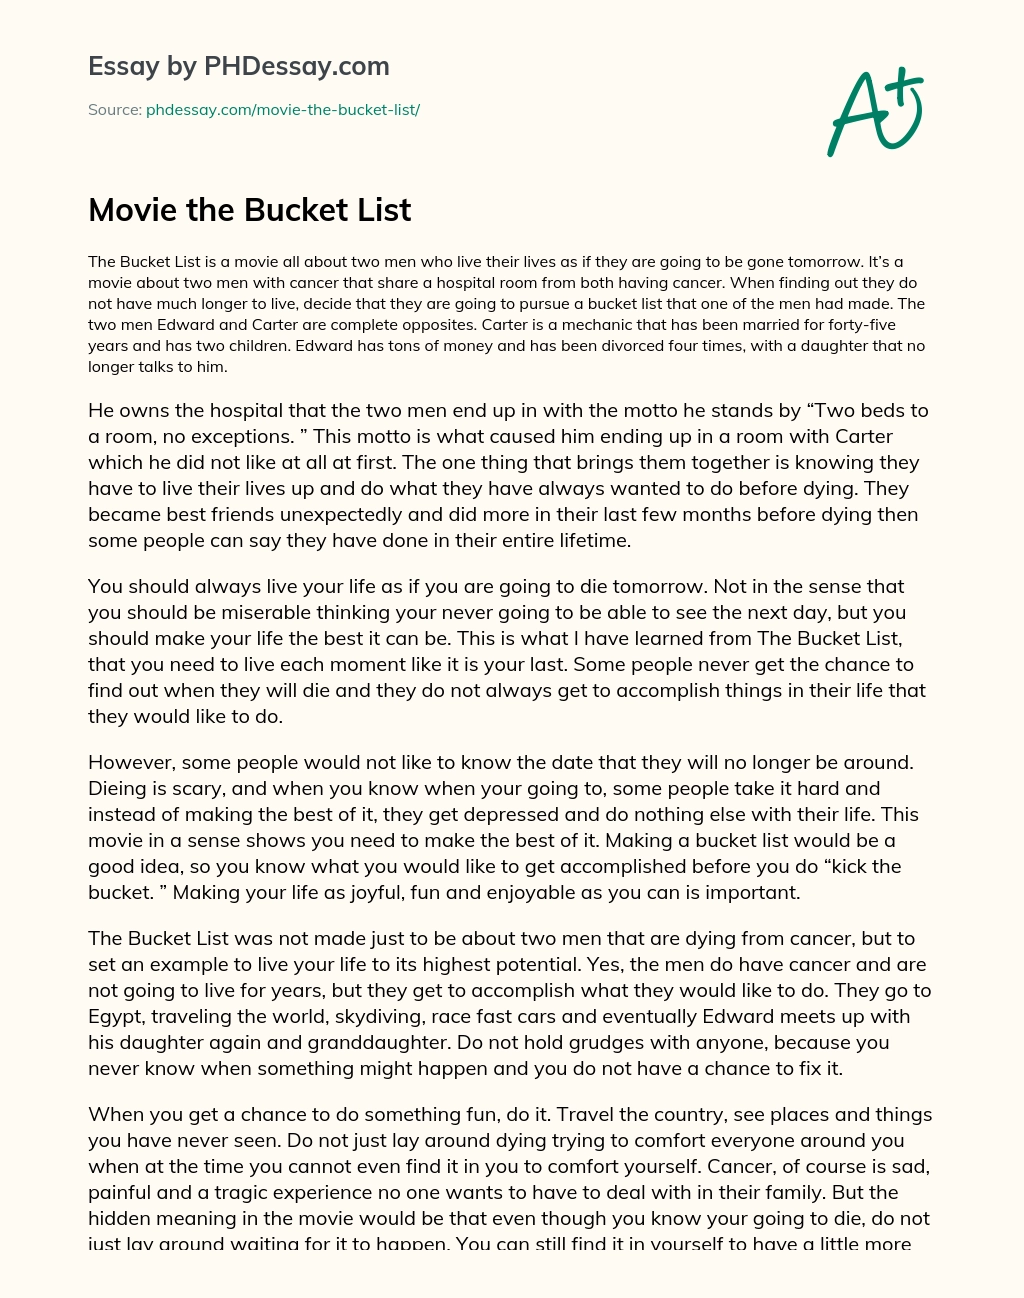 Movie the Bucket List essay